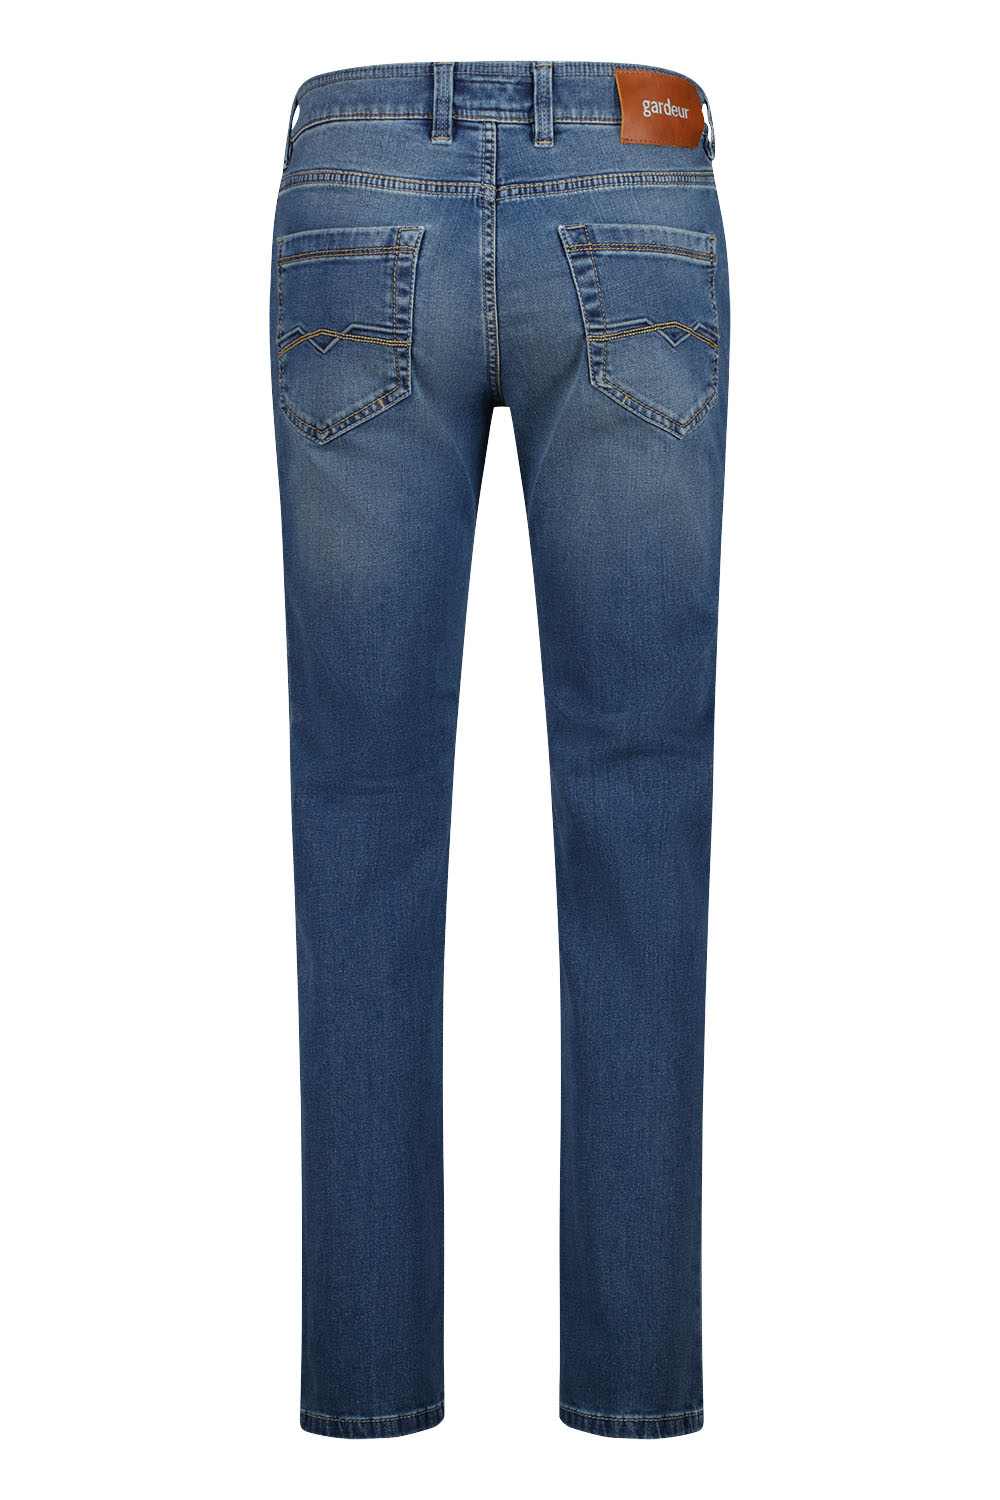 Gardeur - Batu Jeans Indigo Blauw - Maat W 33 - L 34 - Modern-fit